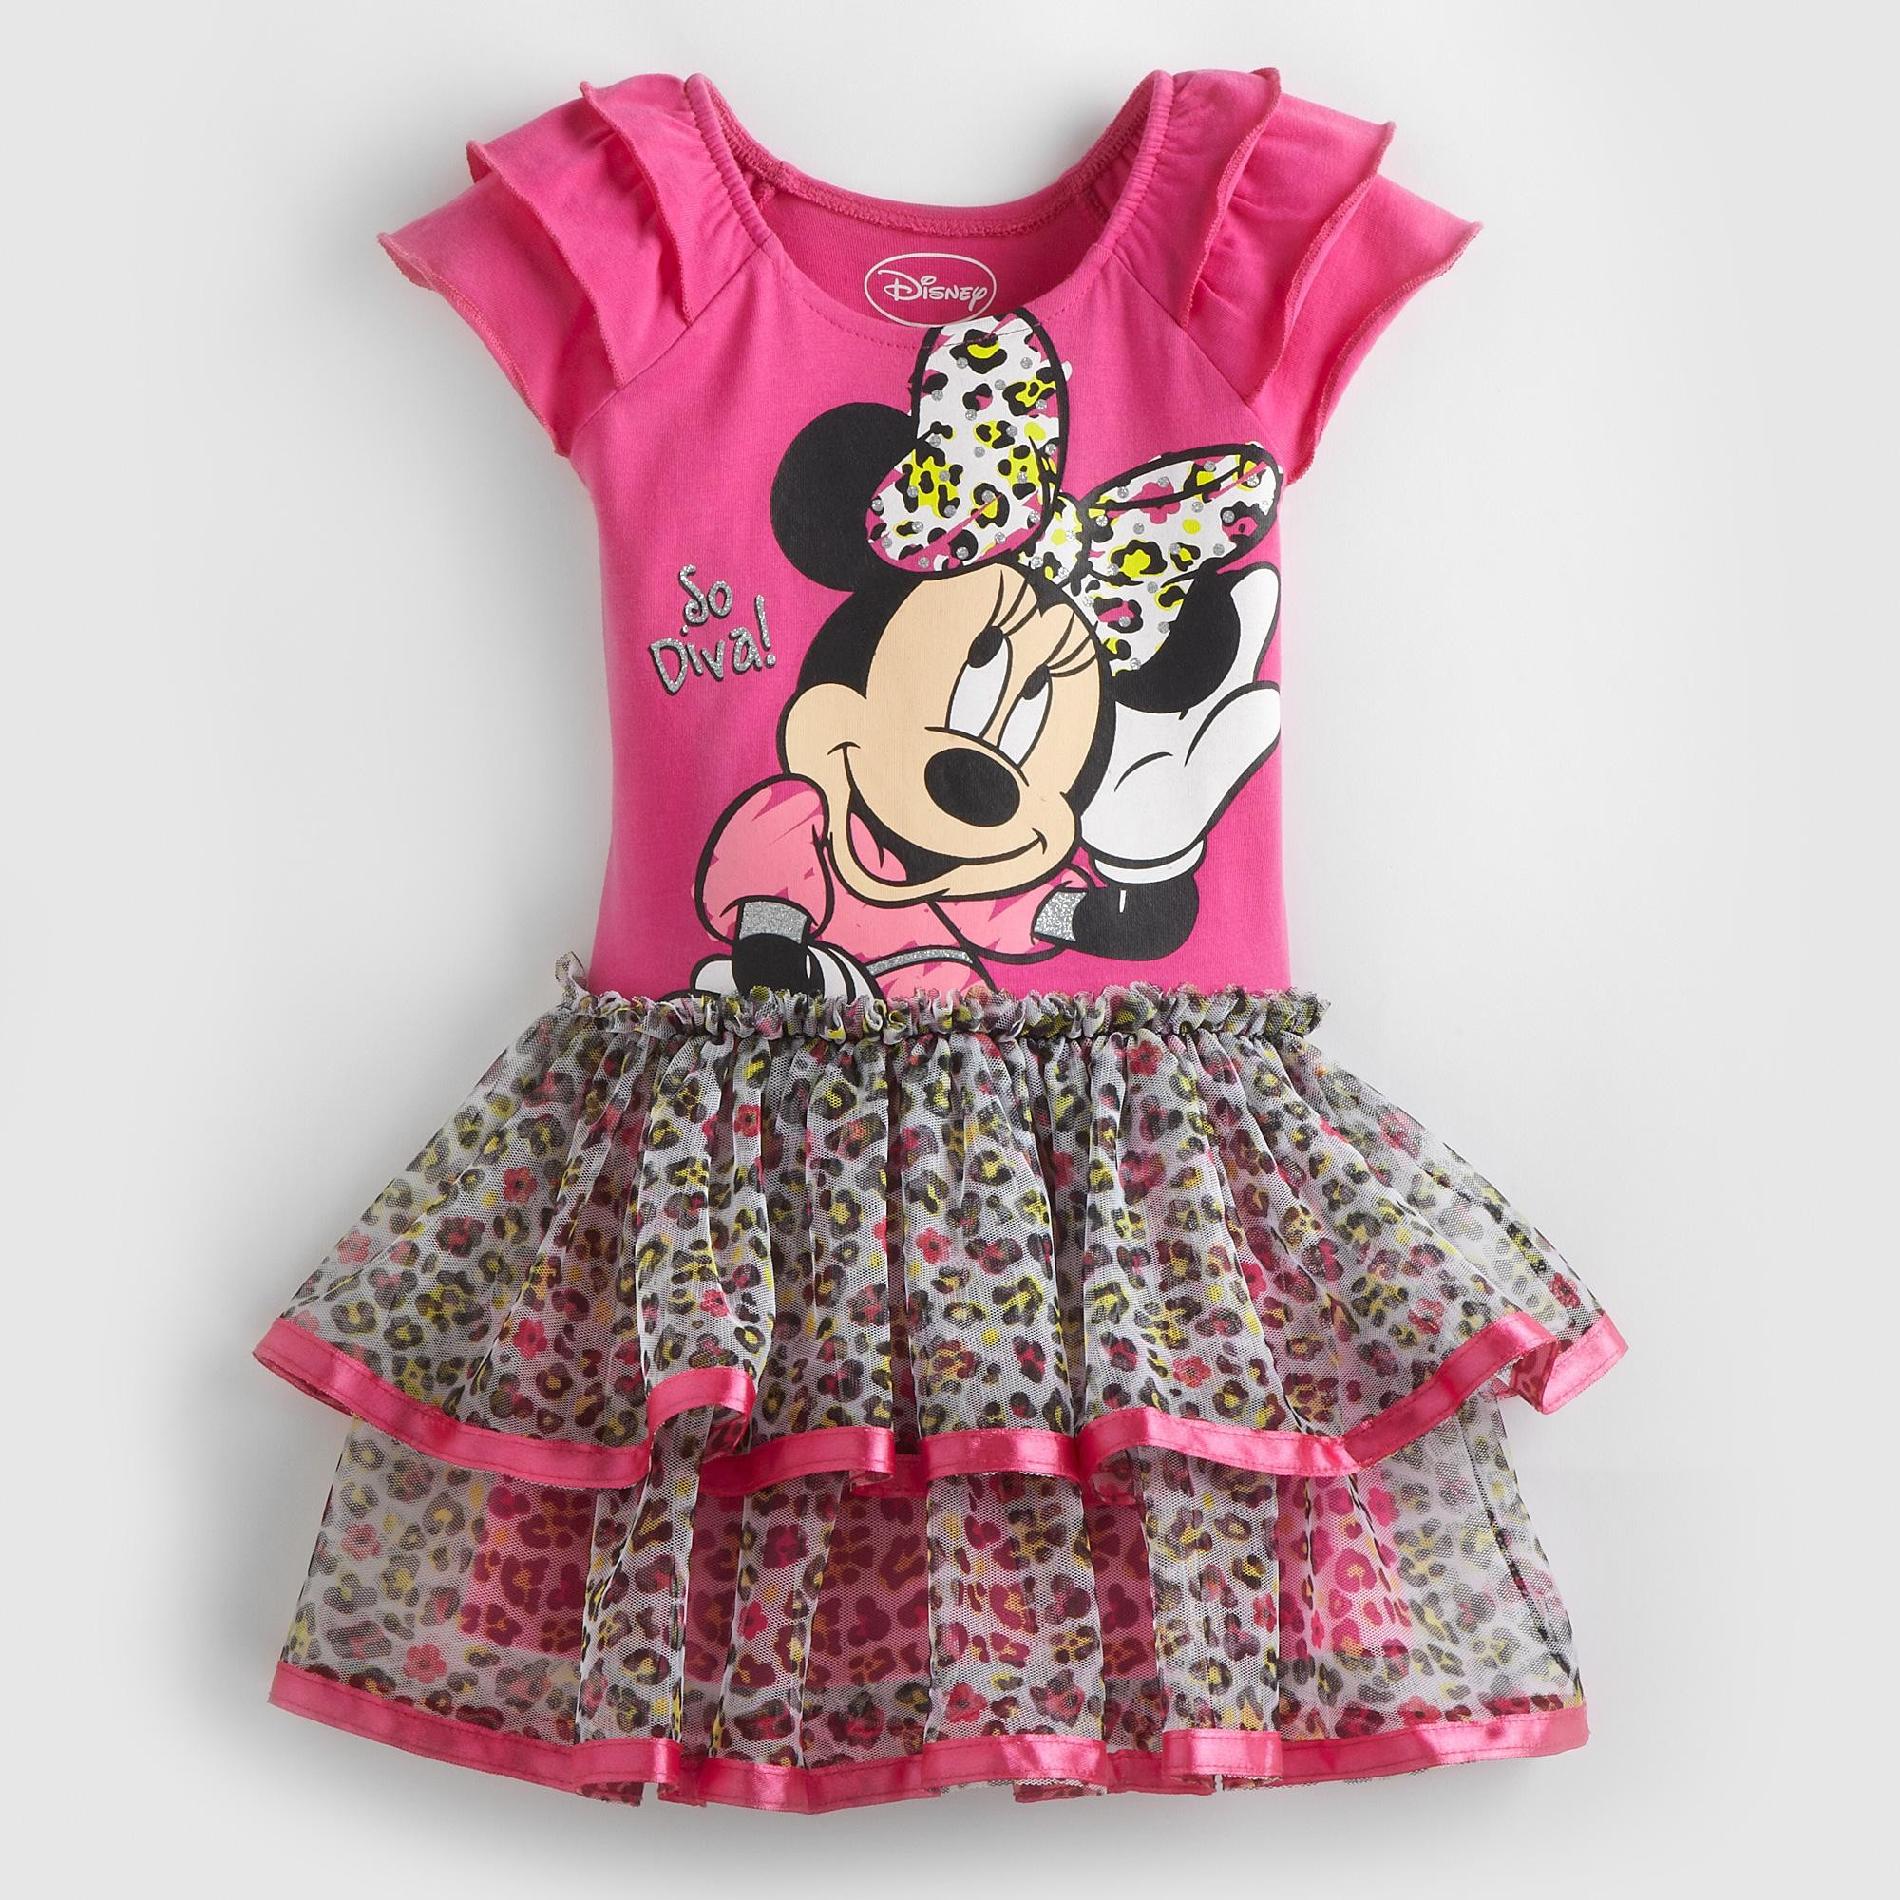 Disney Minnie Mouse Infant & Toddler Girl's T-Shirt Dress